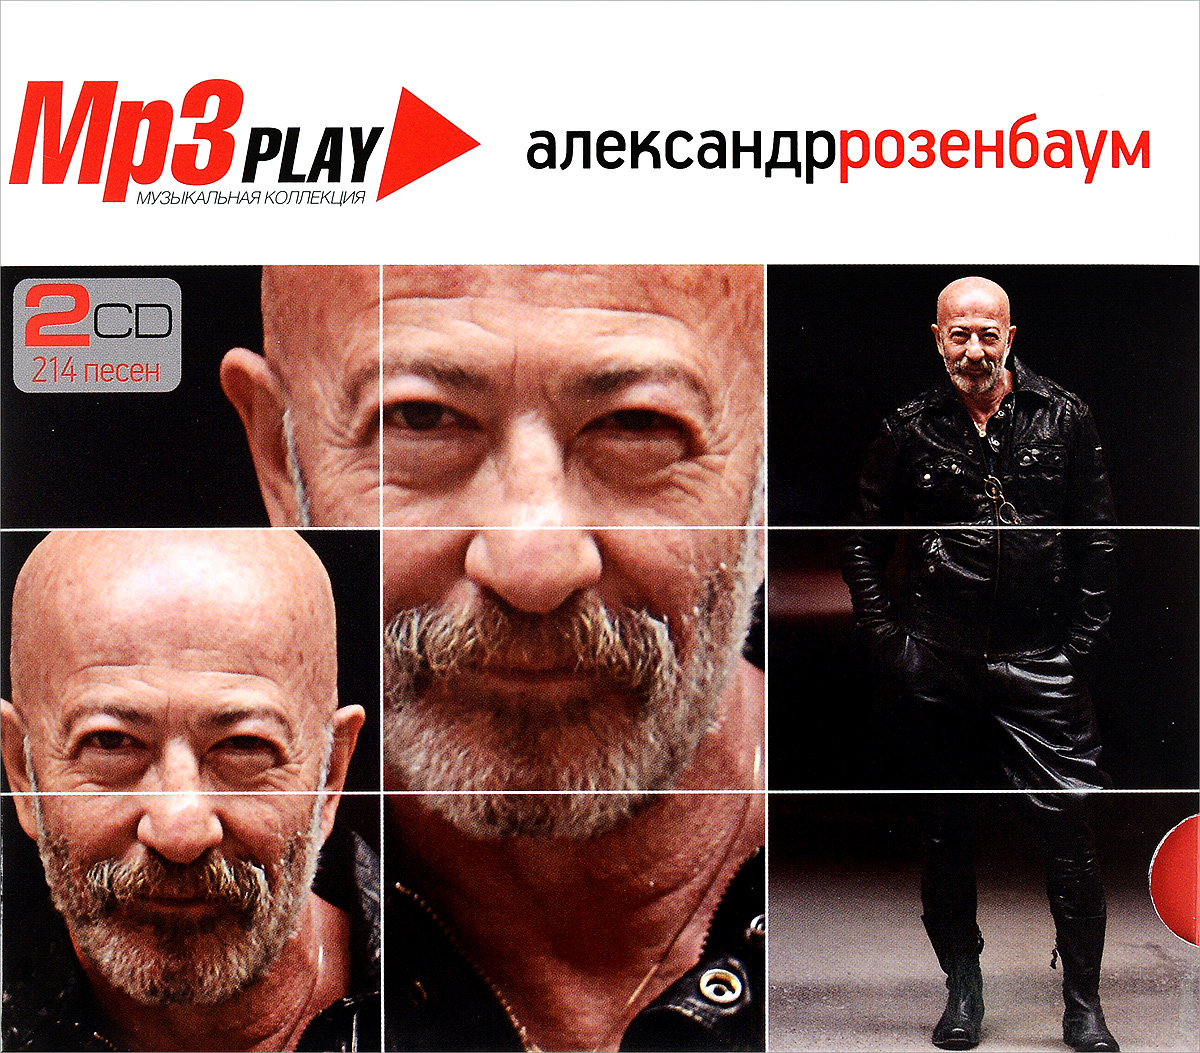 MP3 Play. Александр Розенбаум (mp3)